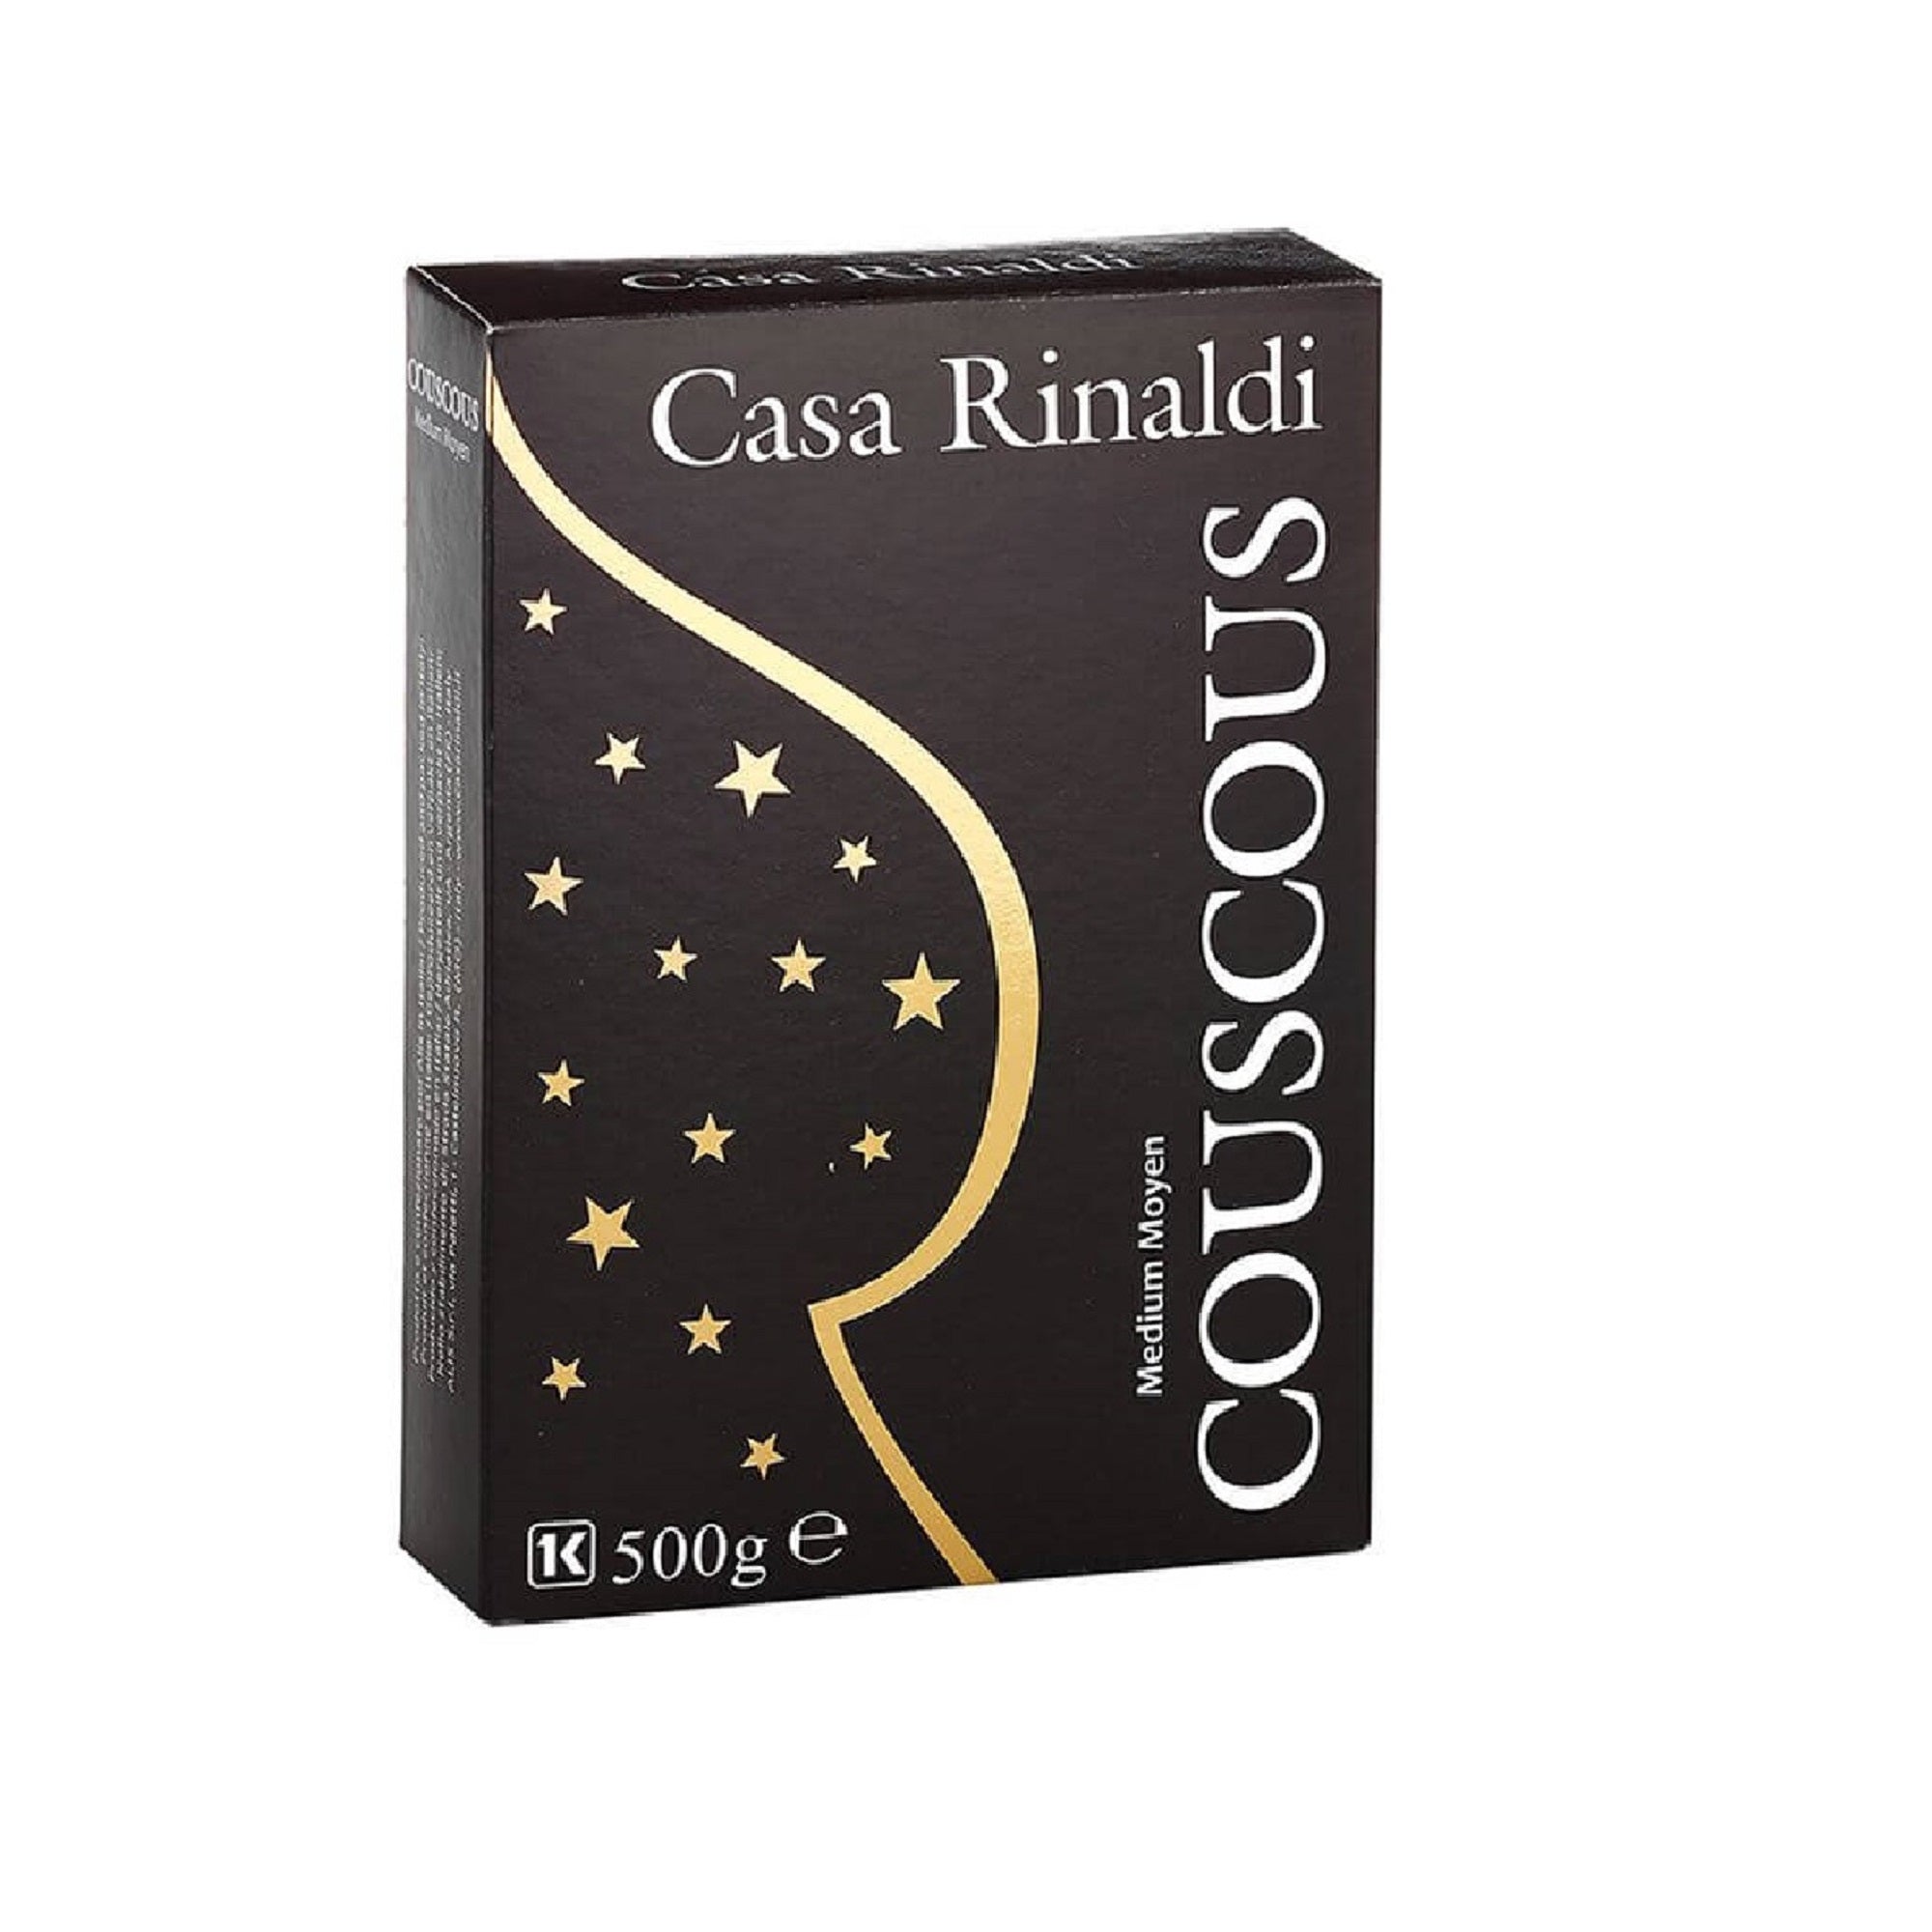 CASA RINALDI COUSCOUS (500g)